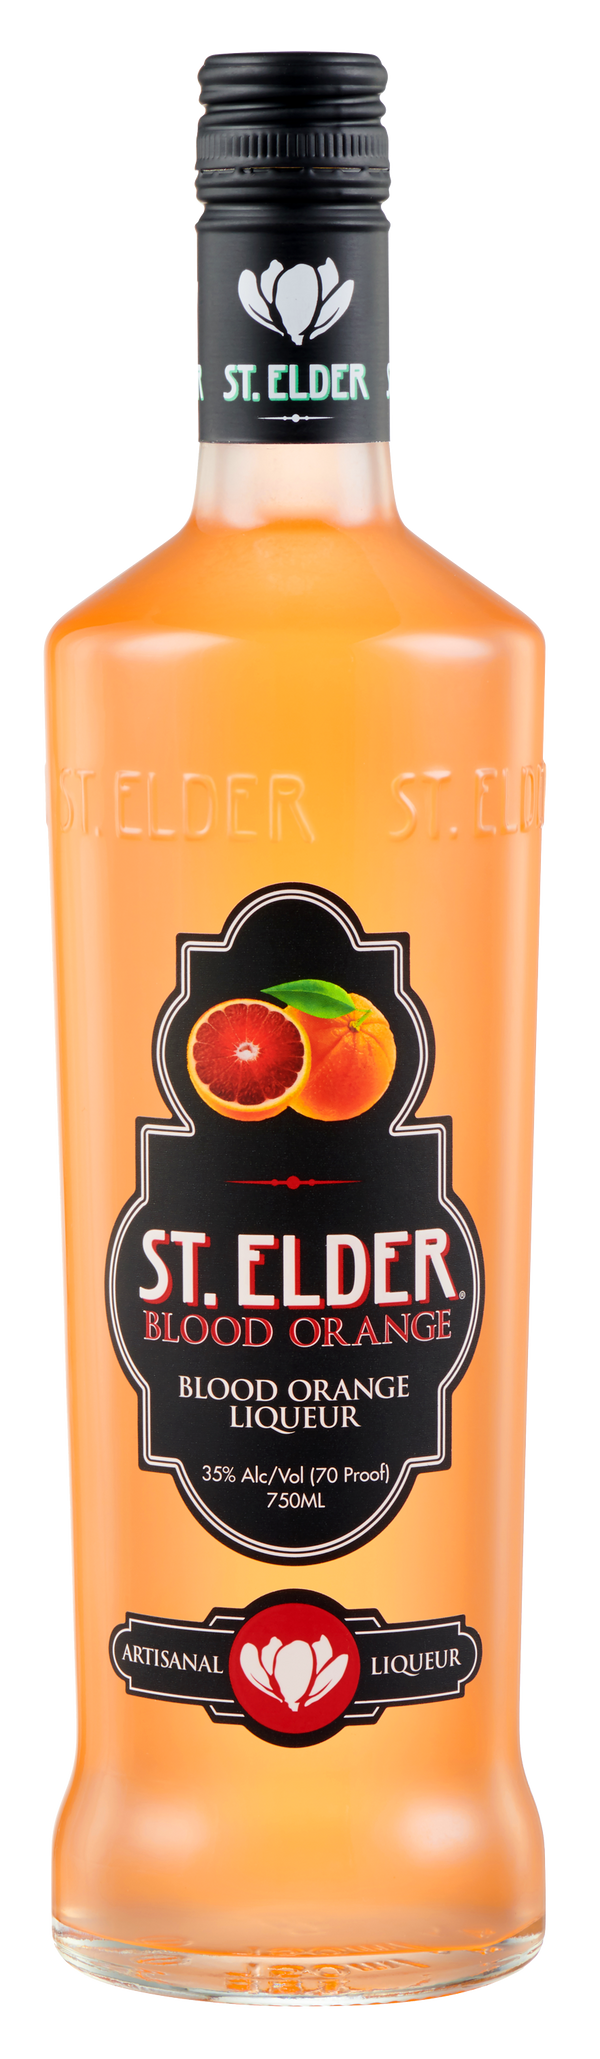 ST. ELDER BLOOD ORANGE LIQUEUR Cordials & Liqueurs – American BeverageWarehouse